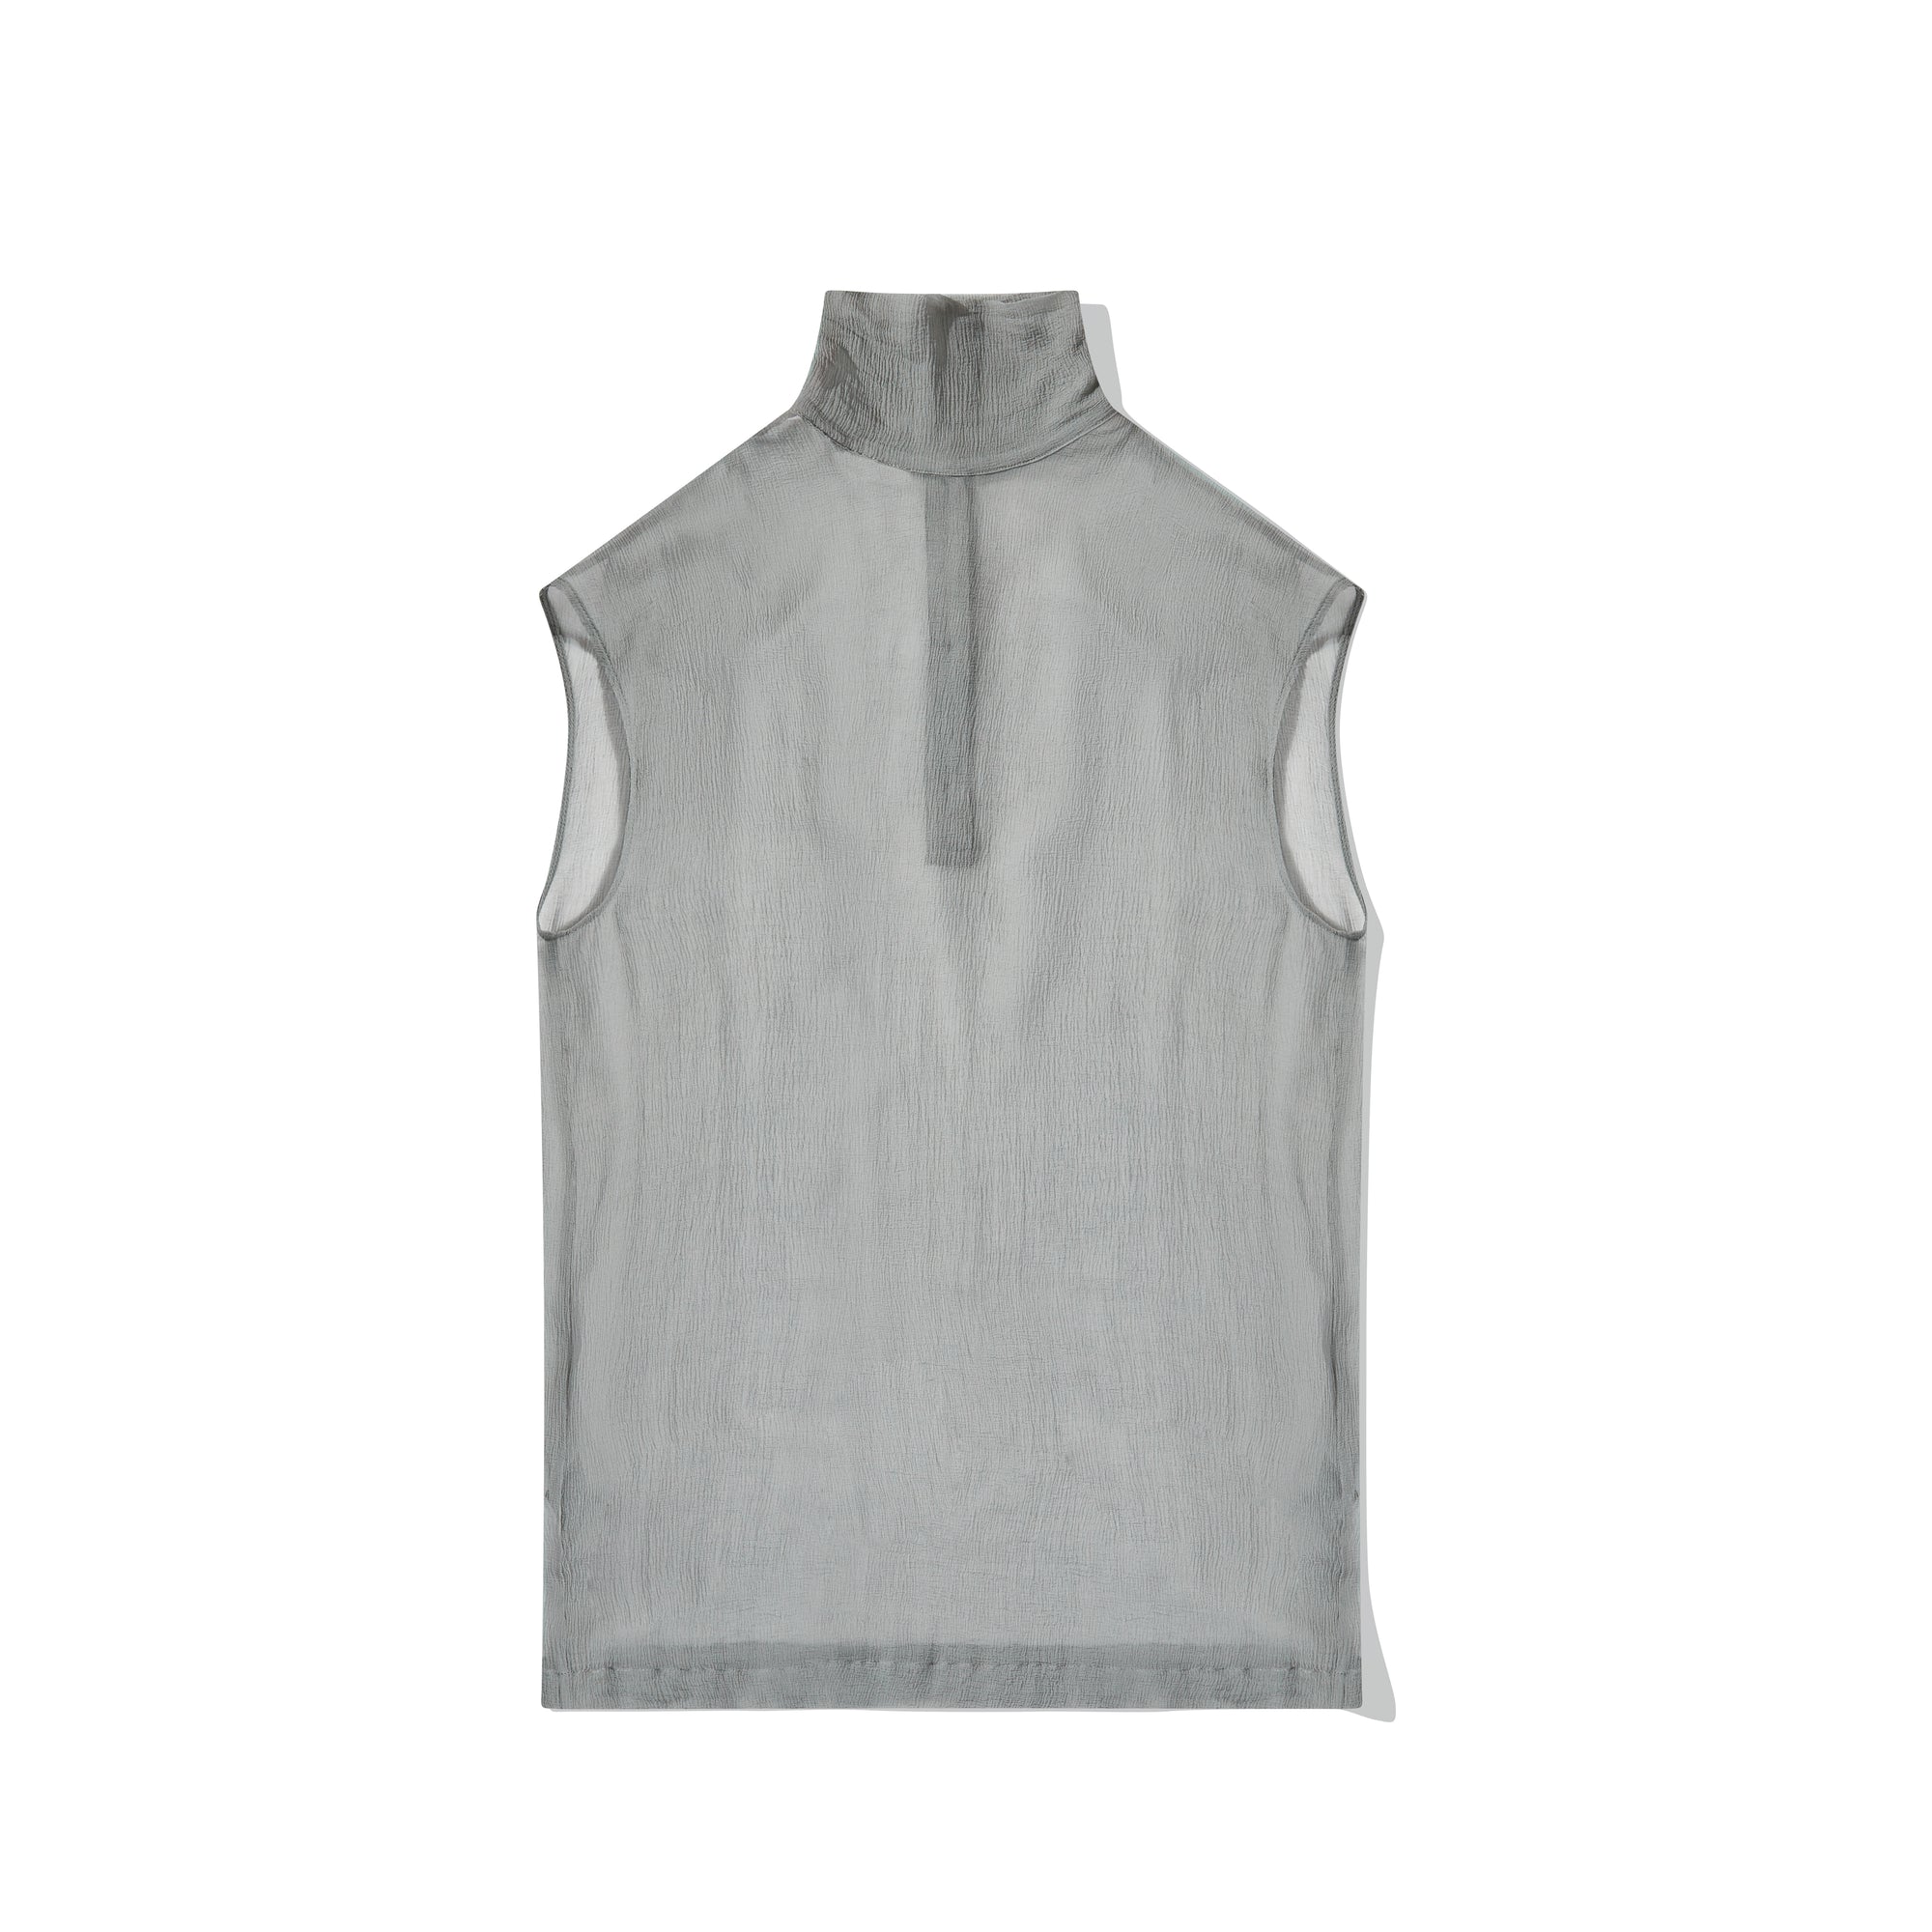 Dries Van Noten - Women's Sleeveless Silk Top - (Light Grey) view 1